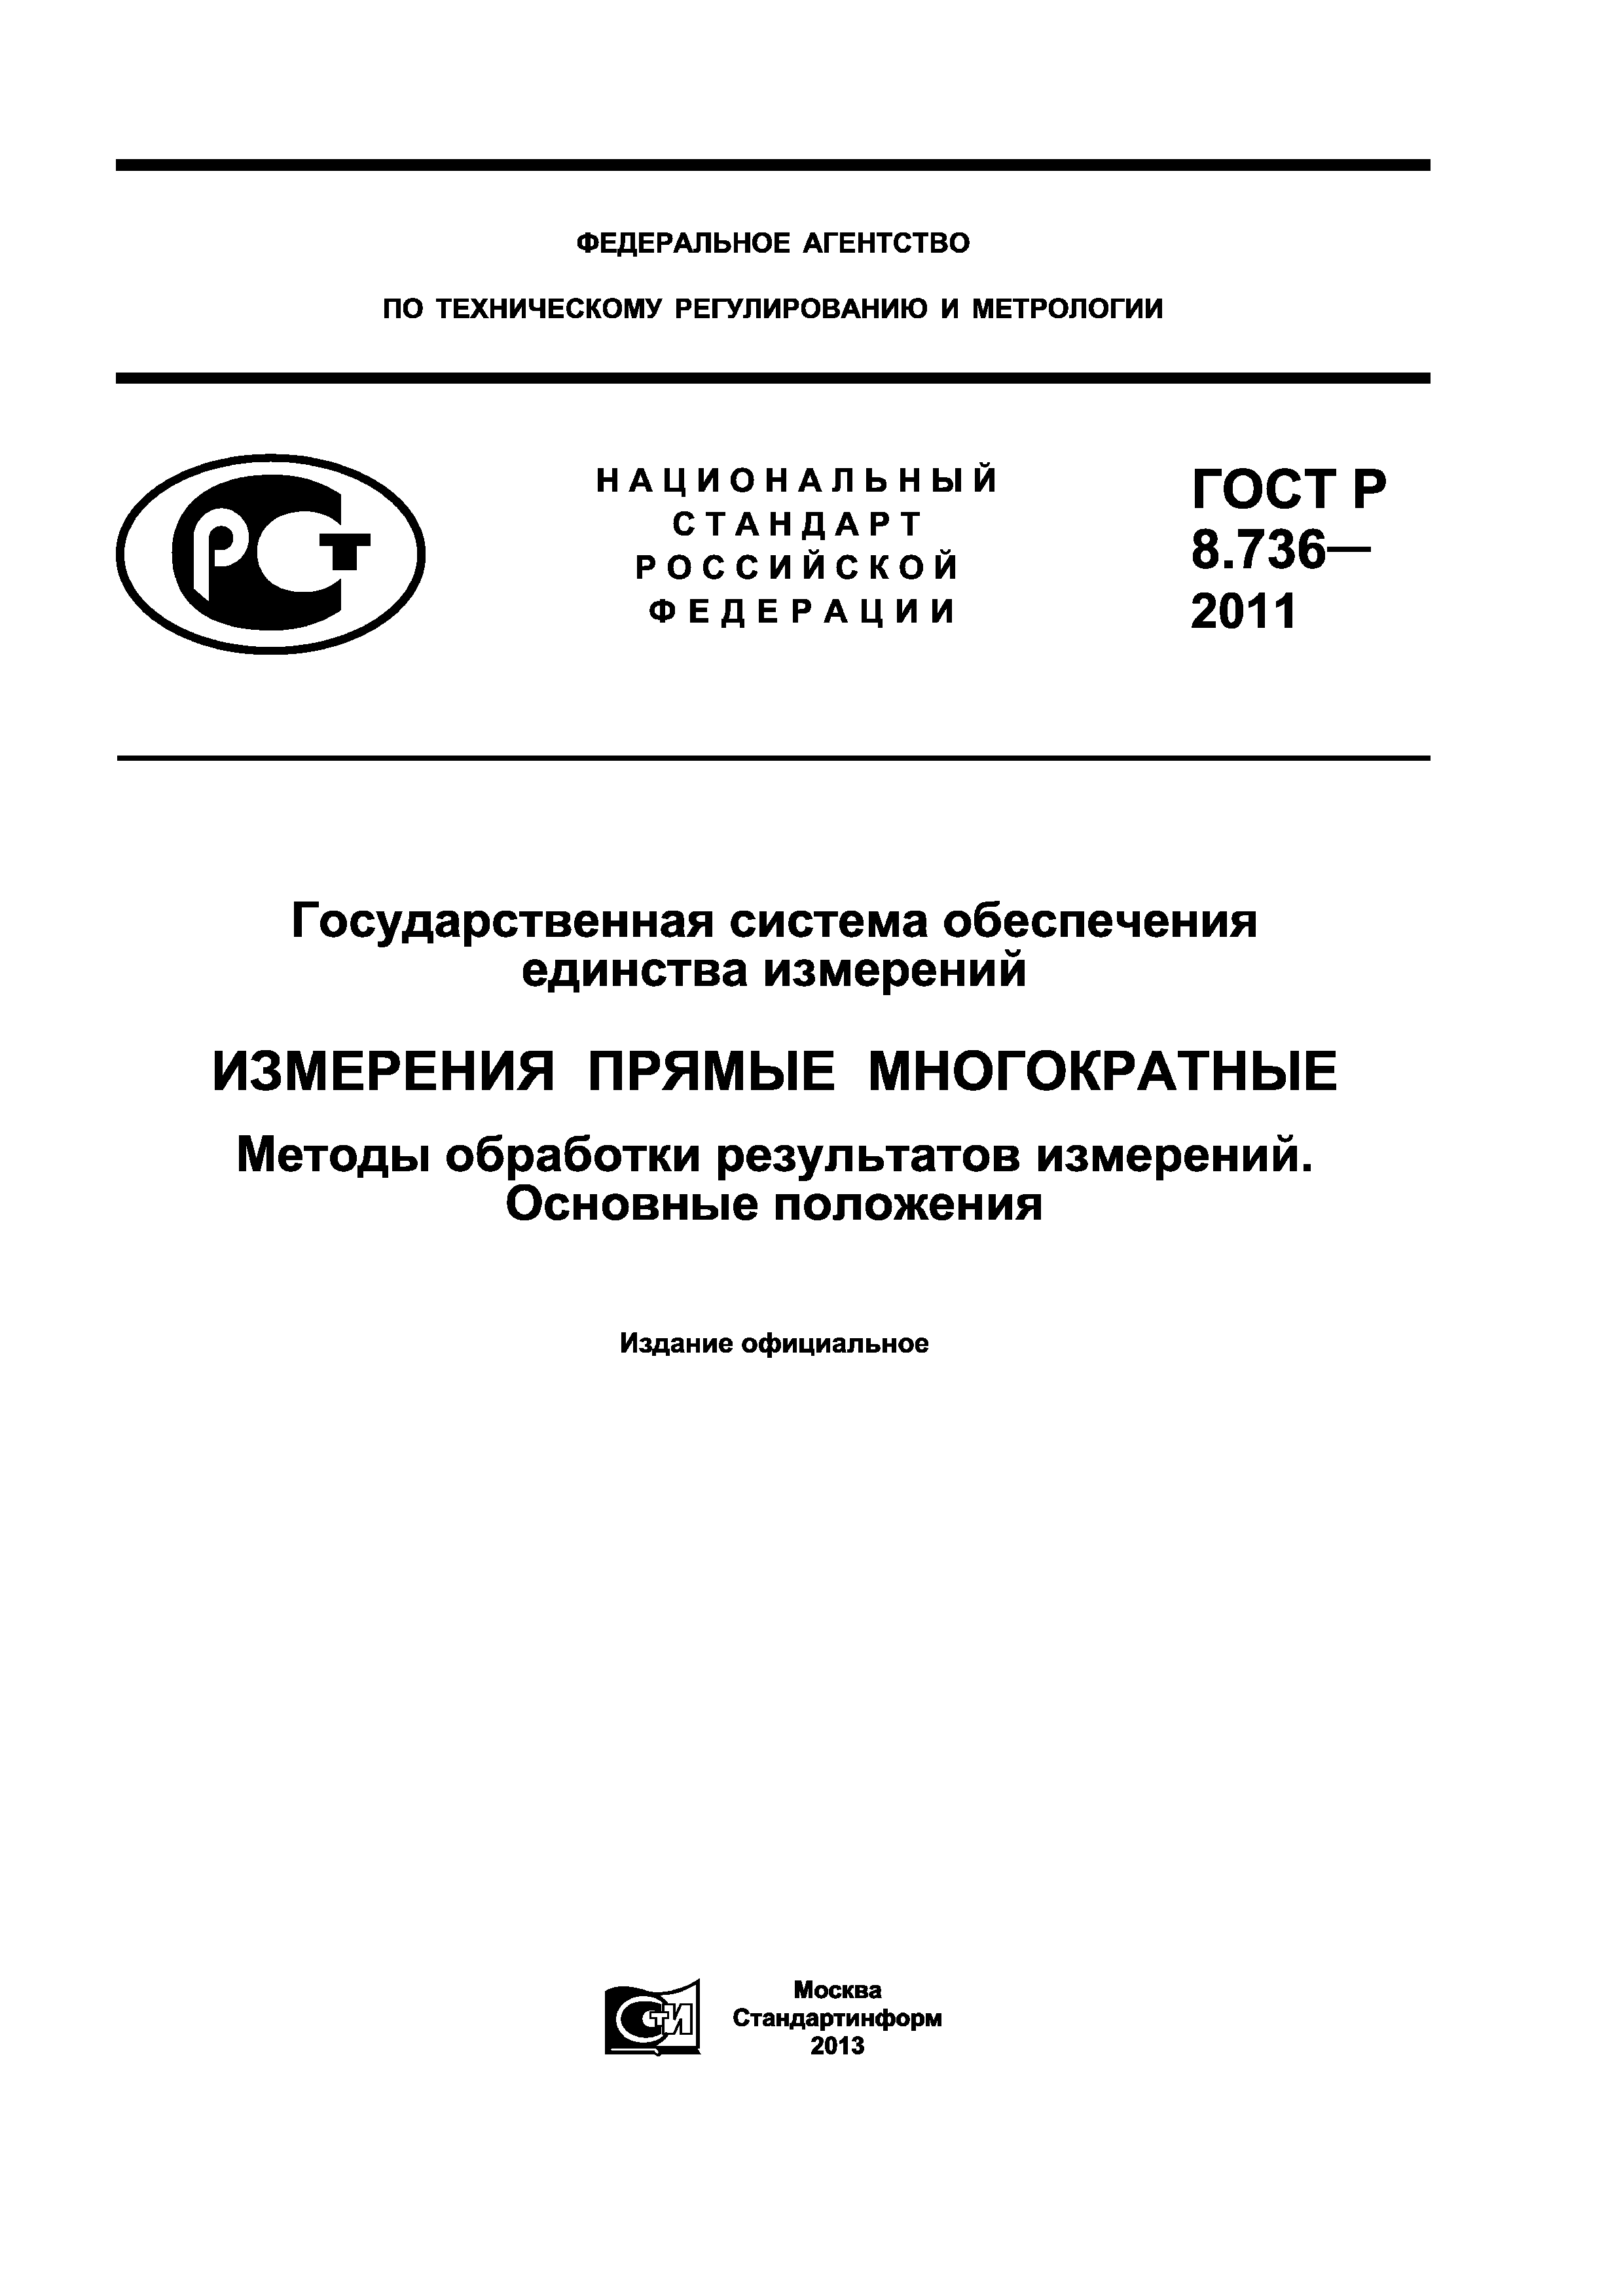 ГОСТ Р 8.736-2011